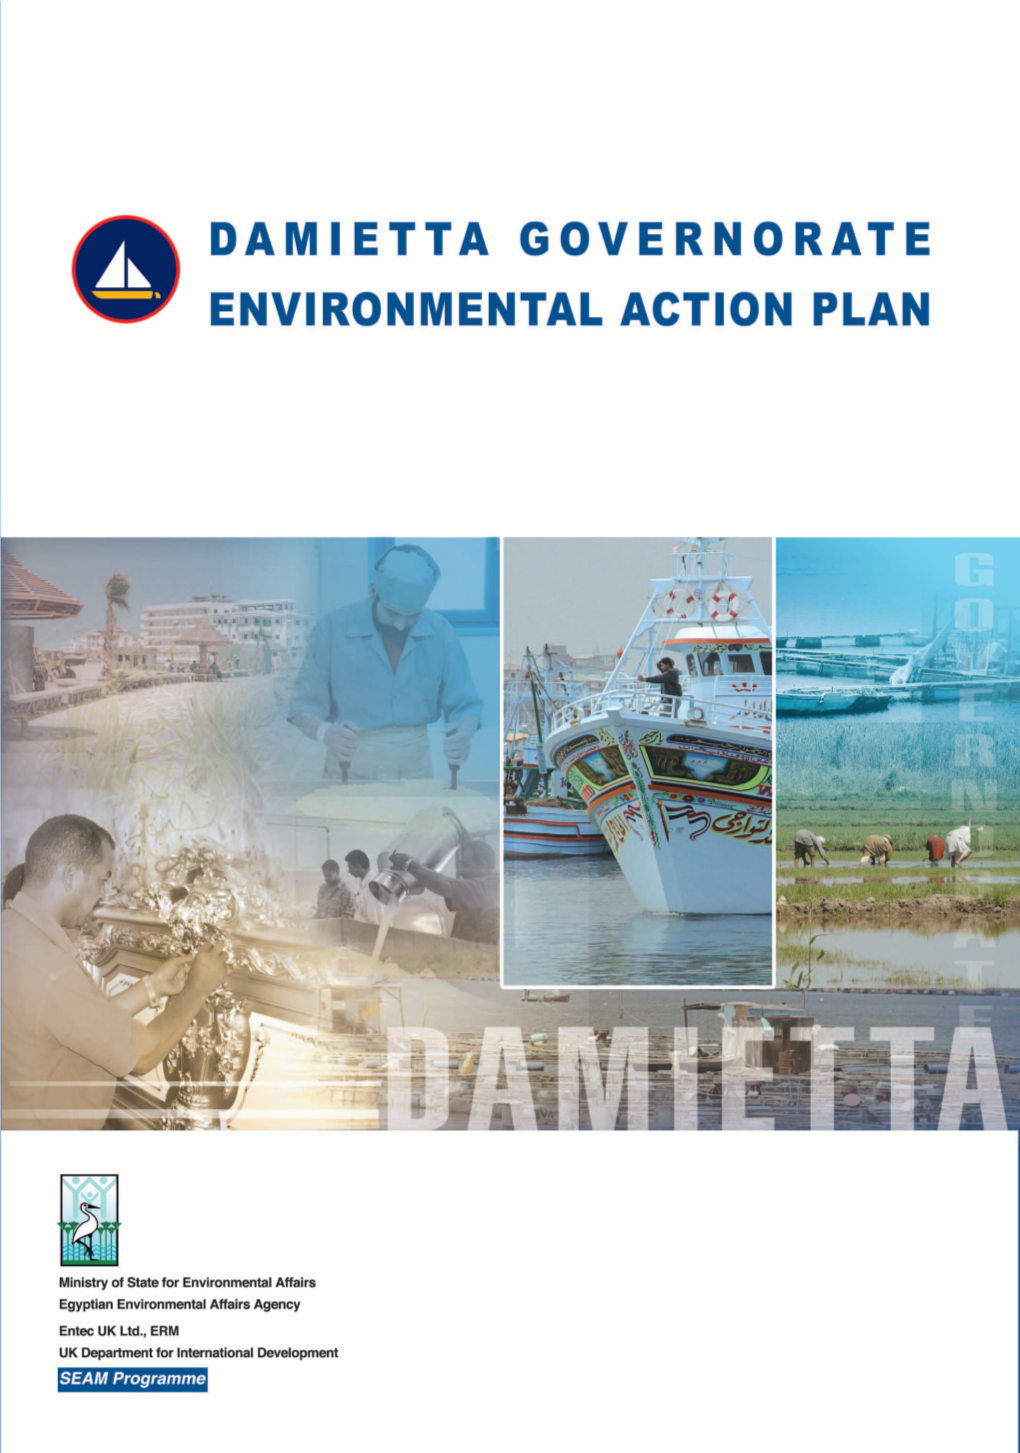 Damietta Governorate Environmental Action Plan